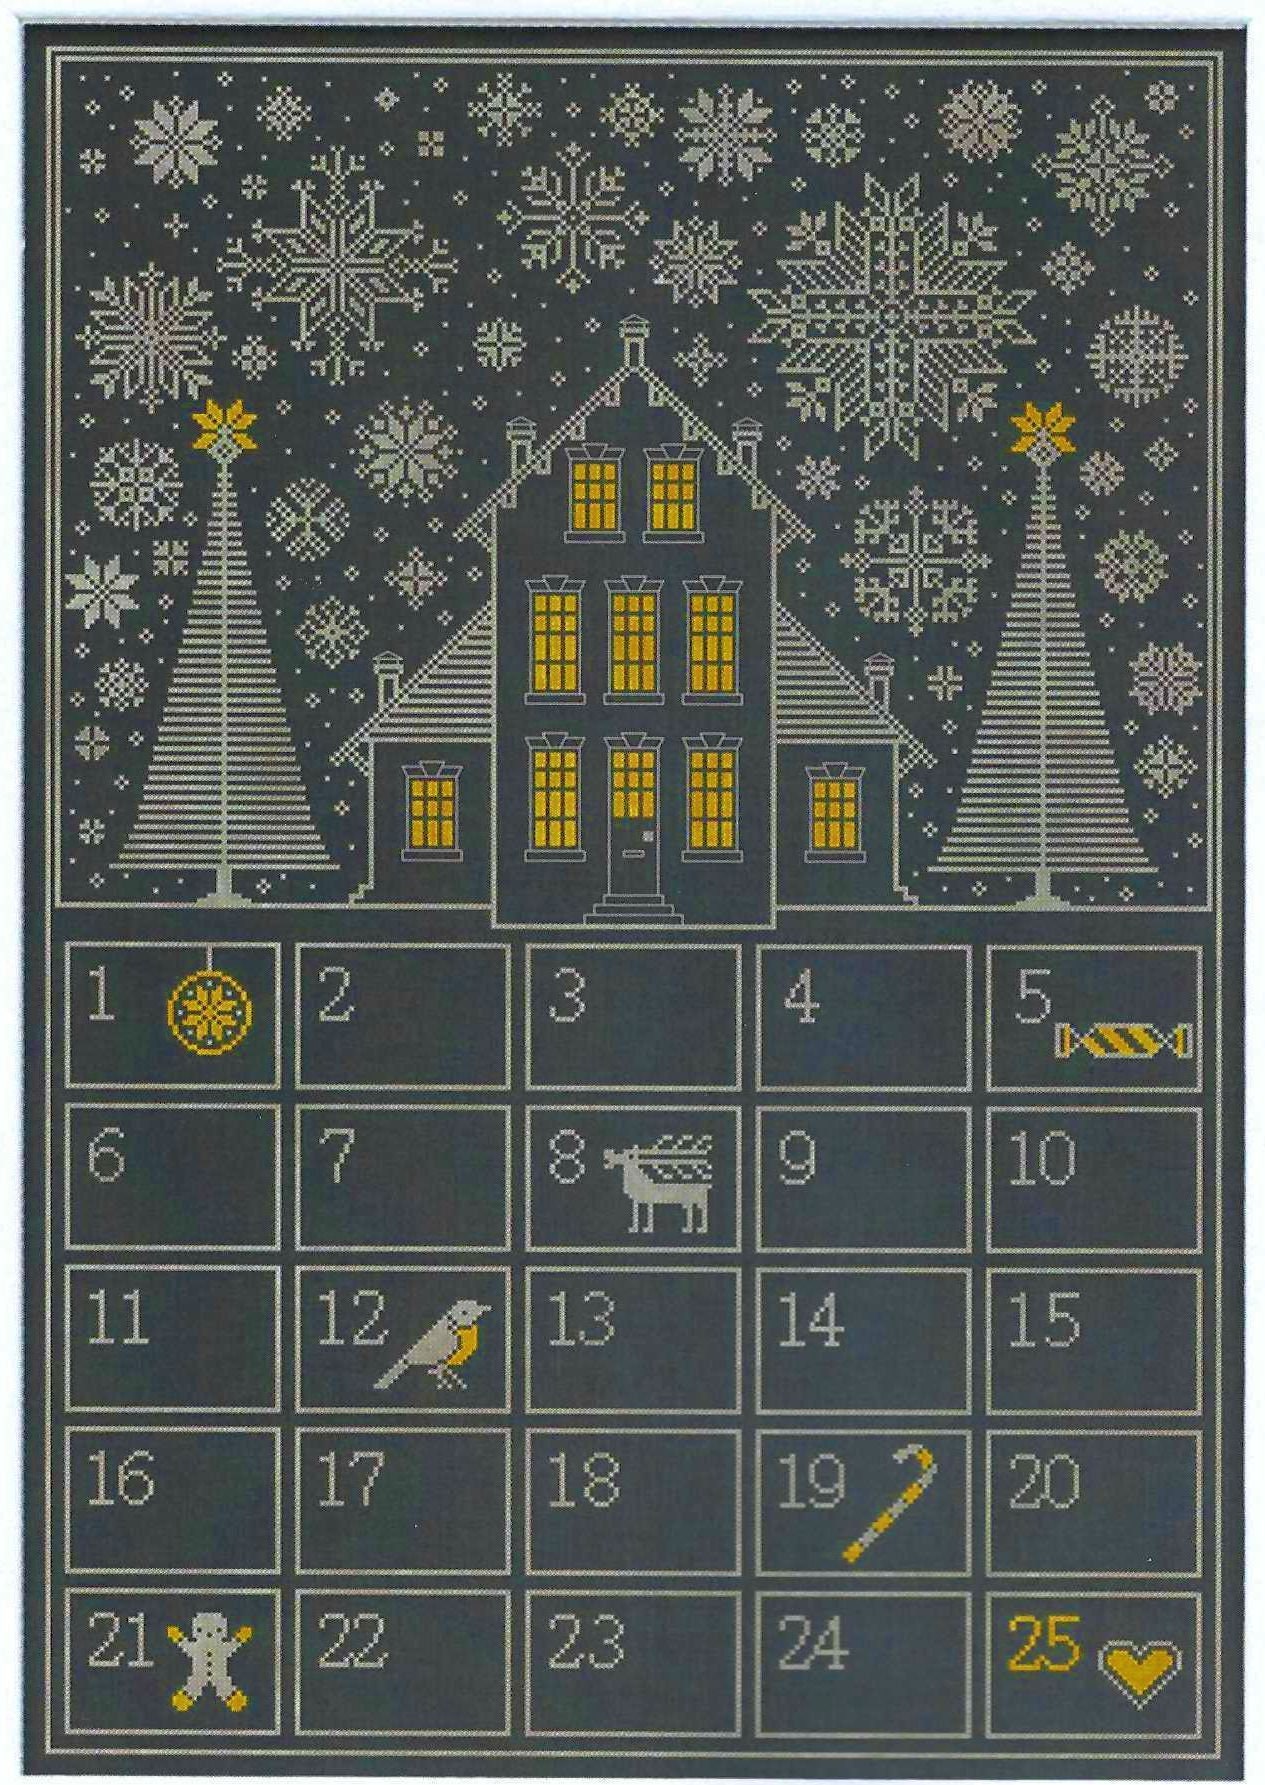 24pcs Lilo Stitch Christmas Advent Calendar Blind Box Home Decor